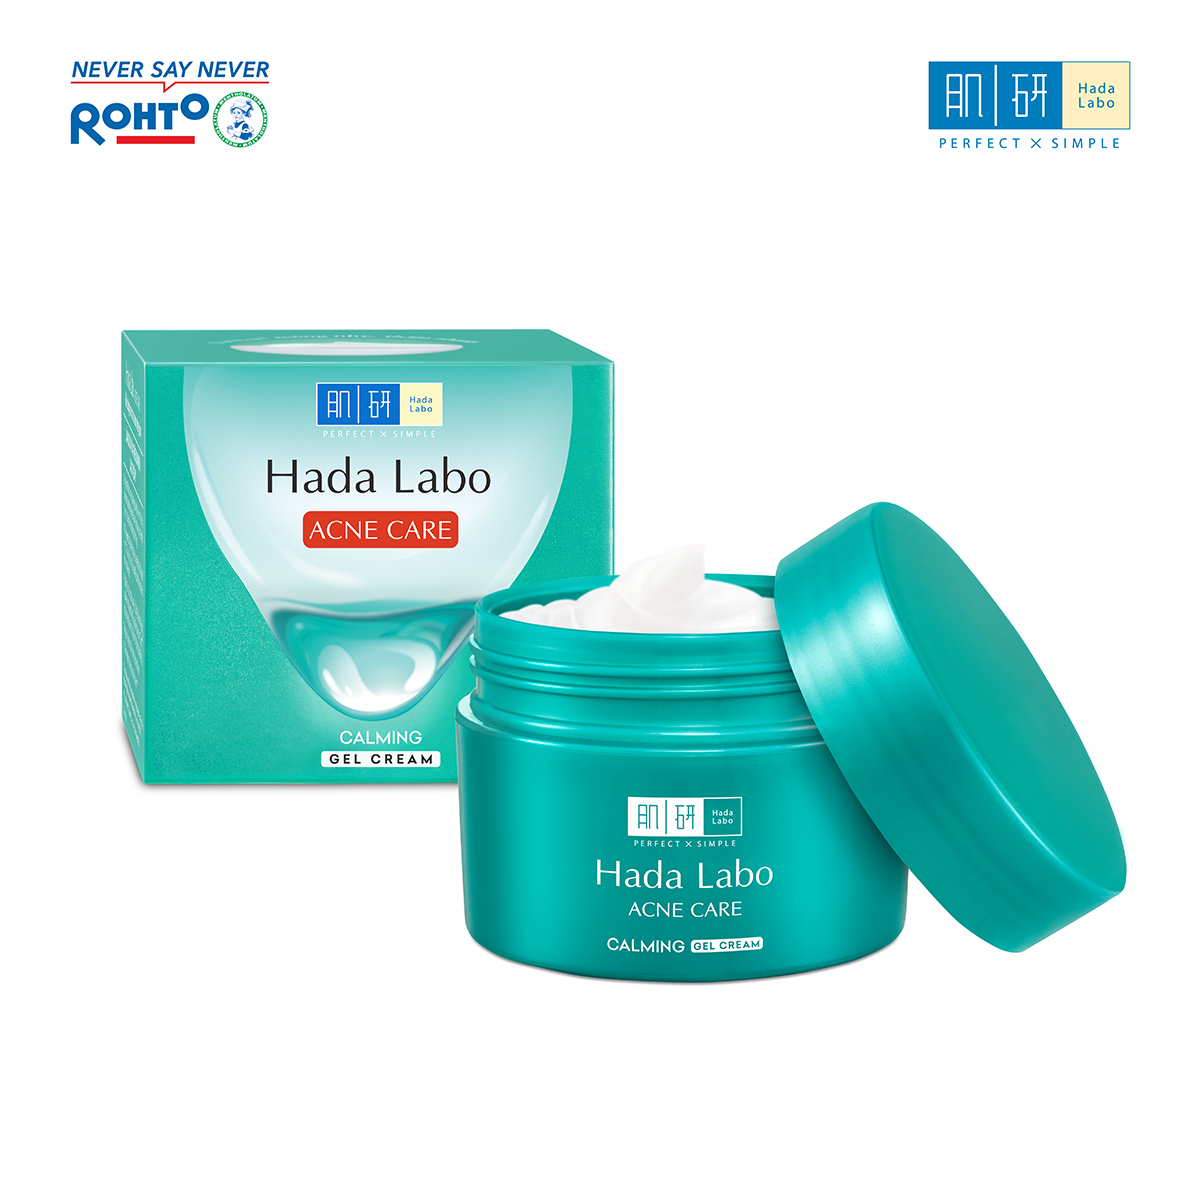 Kem dưỡng ẩm cho da mụn, nhạy cảm Hada Labo dạng gel Acne Care Calming Gel Cream 50g